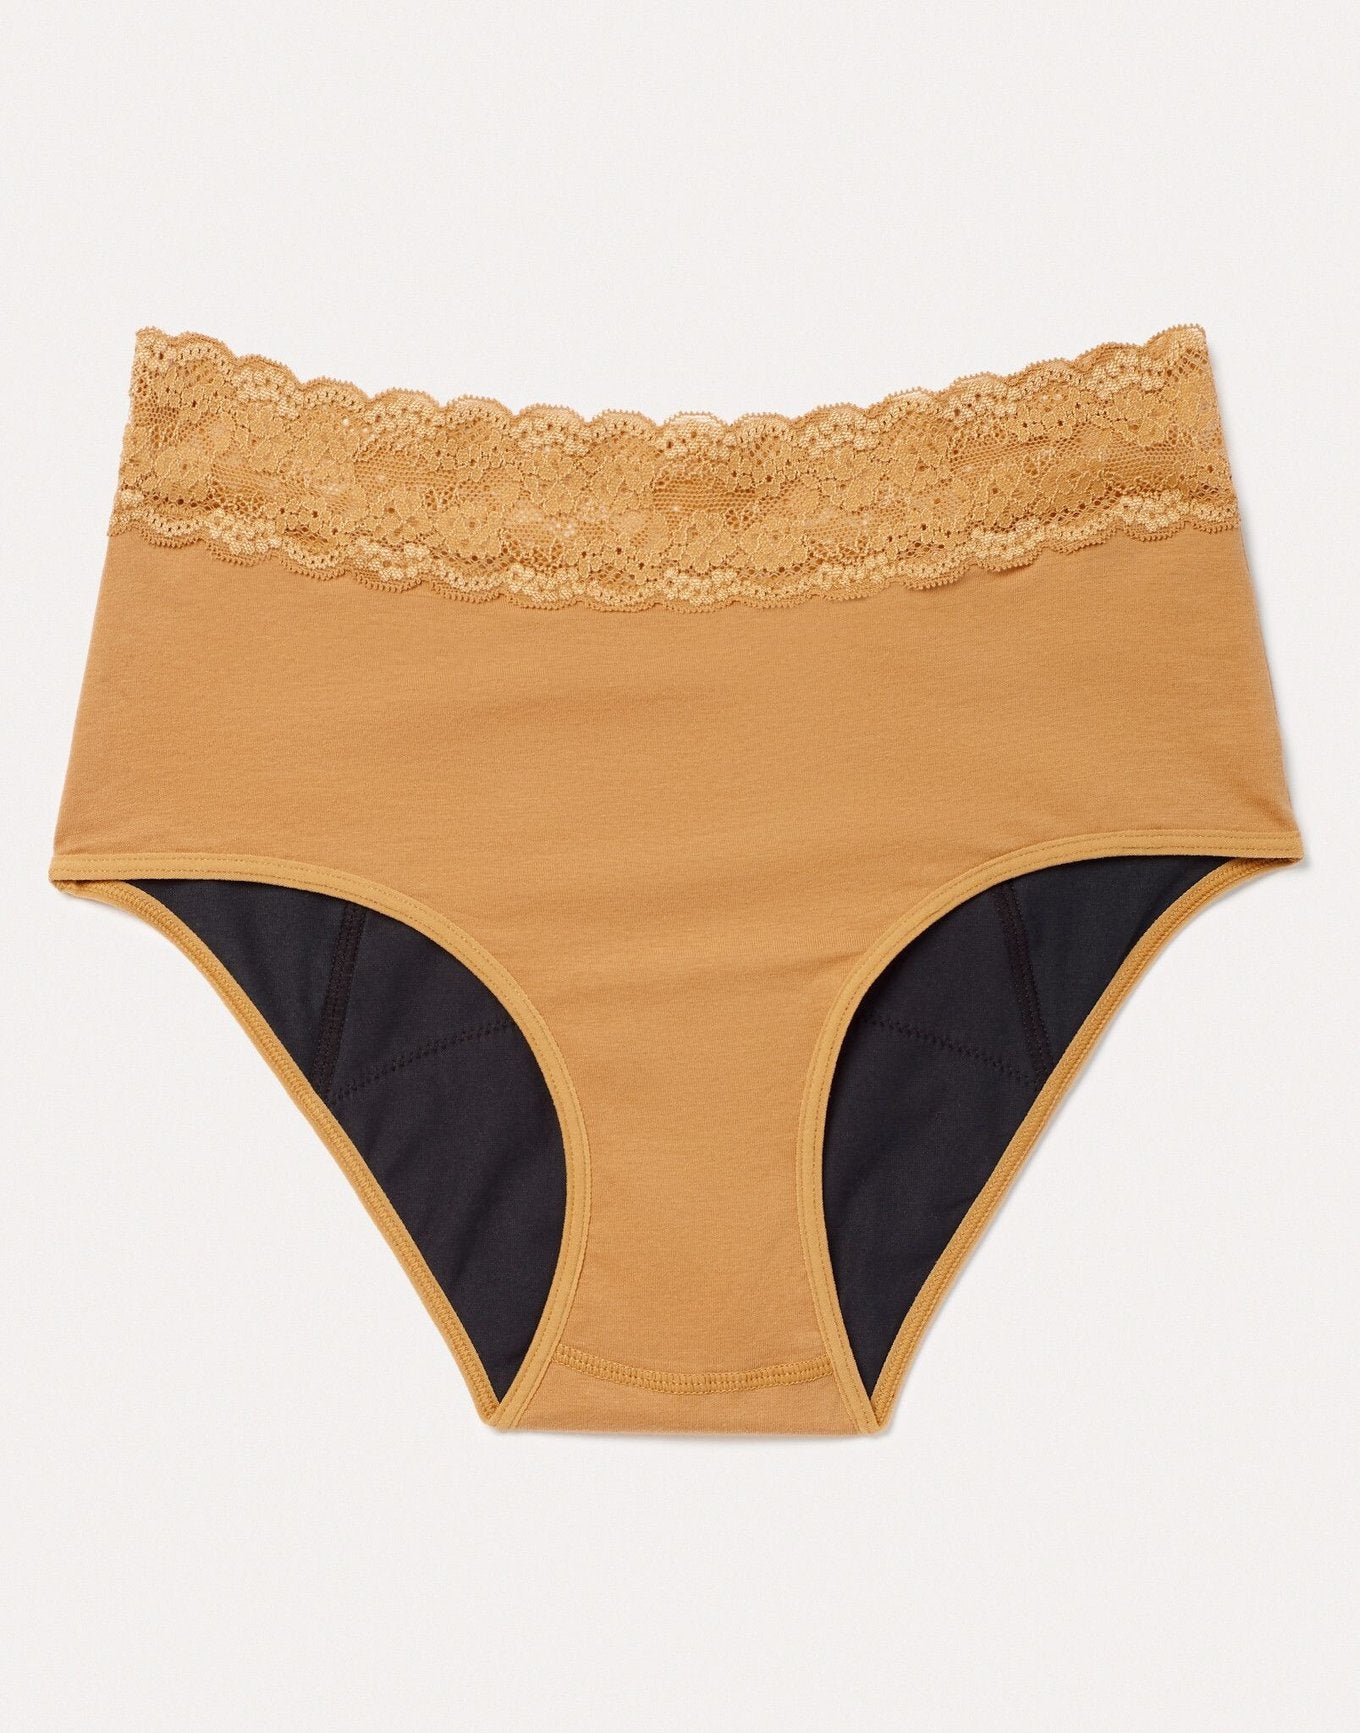 Joyja Ella period-proof panty in color Sand Dry and shape midi brief